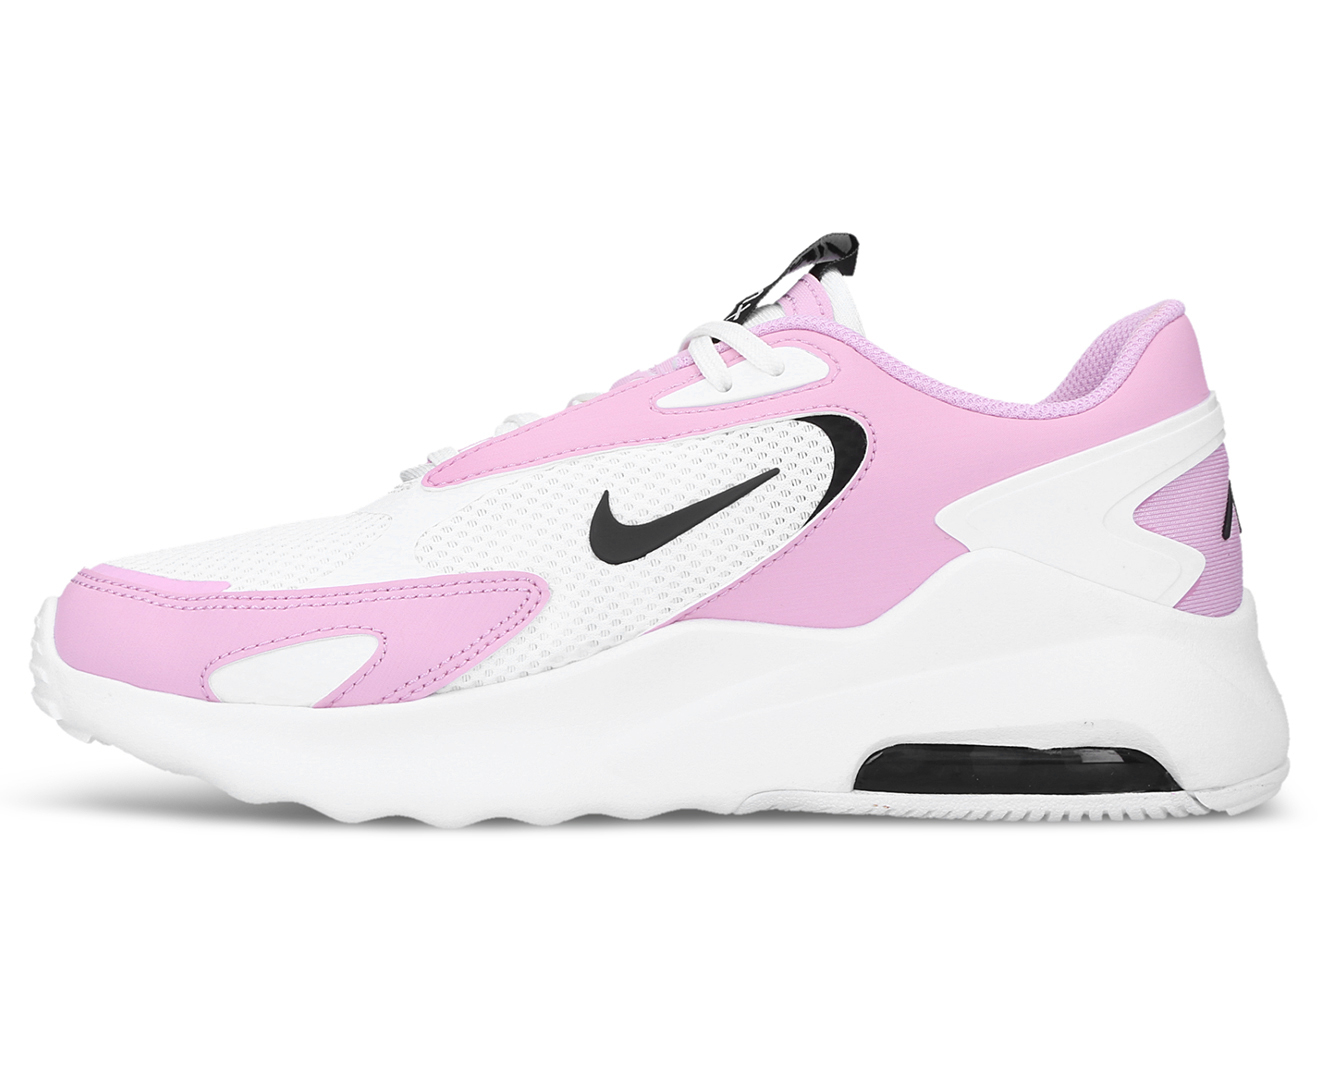 Nike Women's Air Max Bolt Sneakers - White/Black/Arctic Pink | Catch.com.au